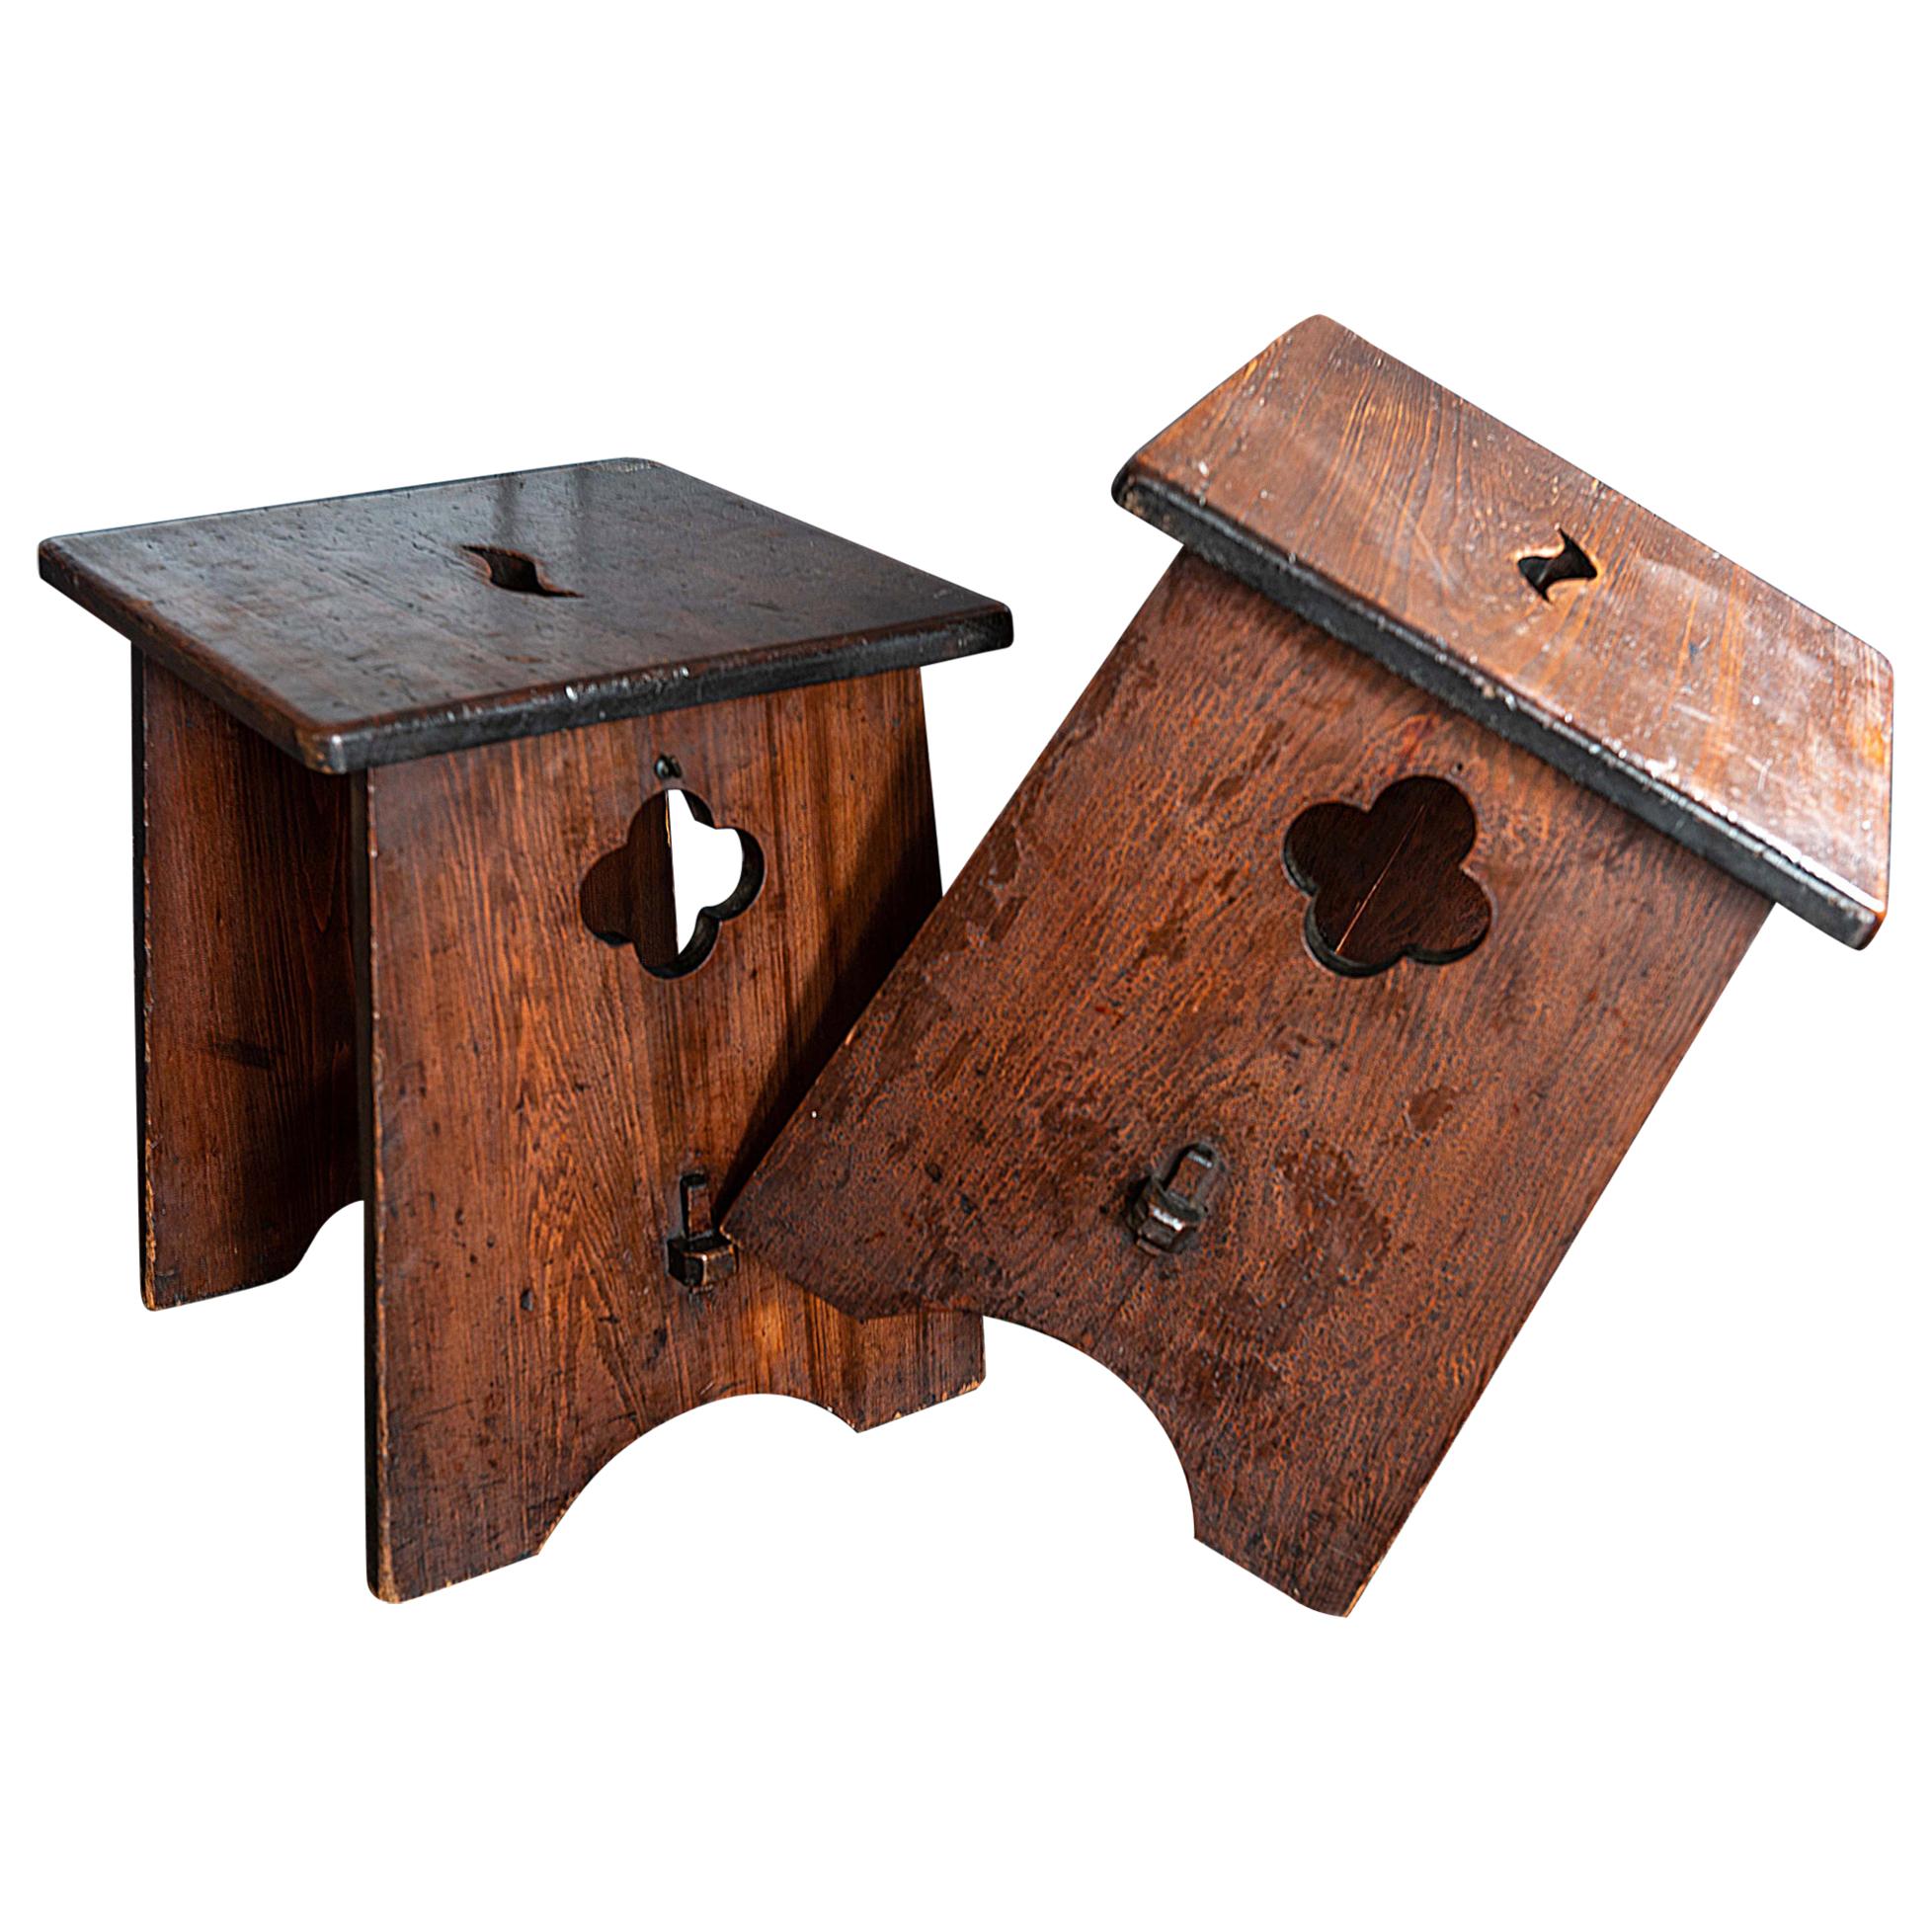 Pair of Pine Arts & Crafts Stools/End Tables, English, circa 1885